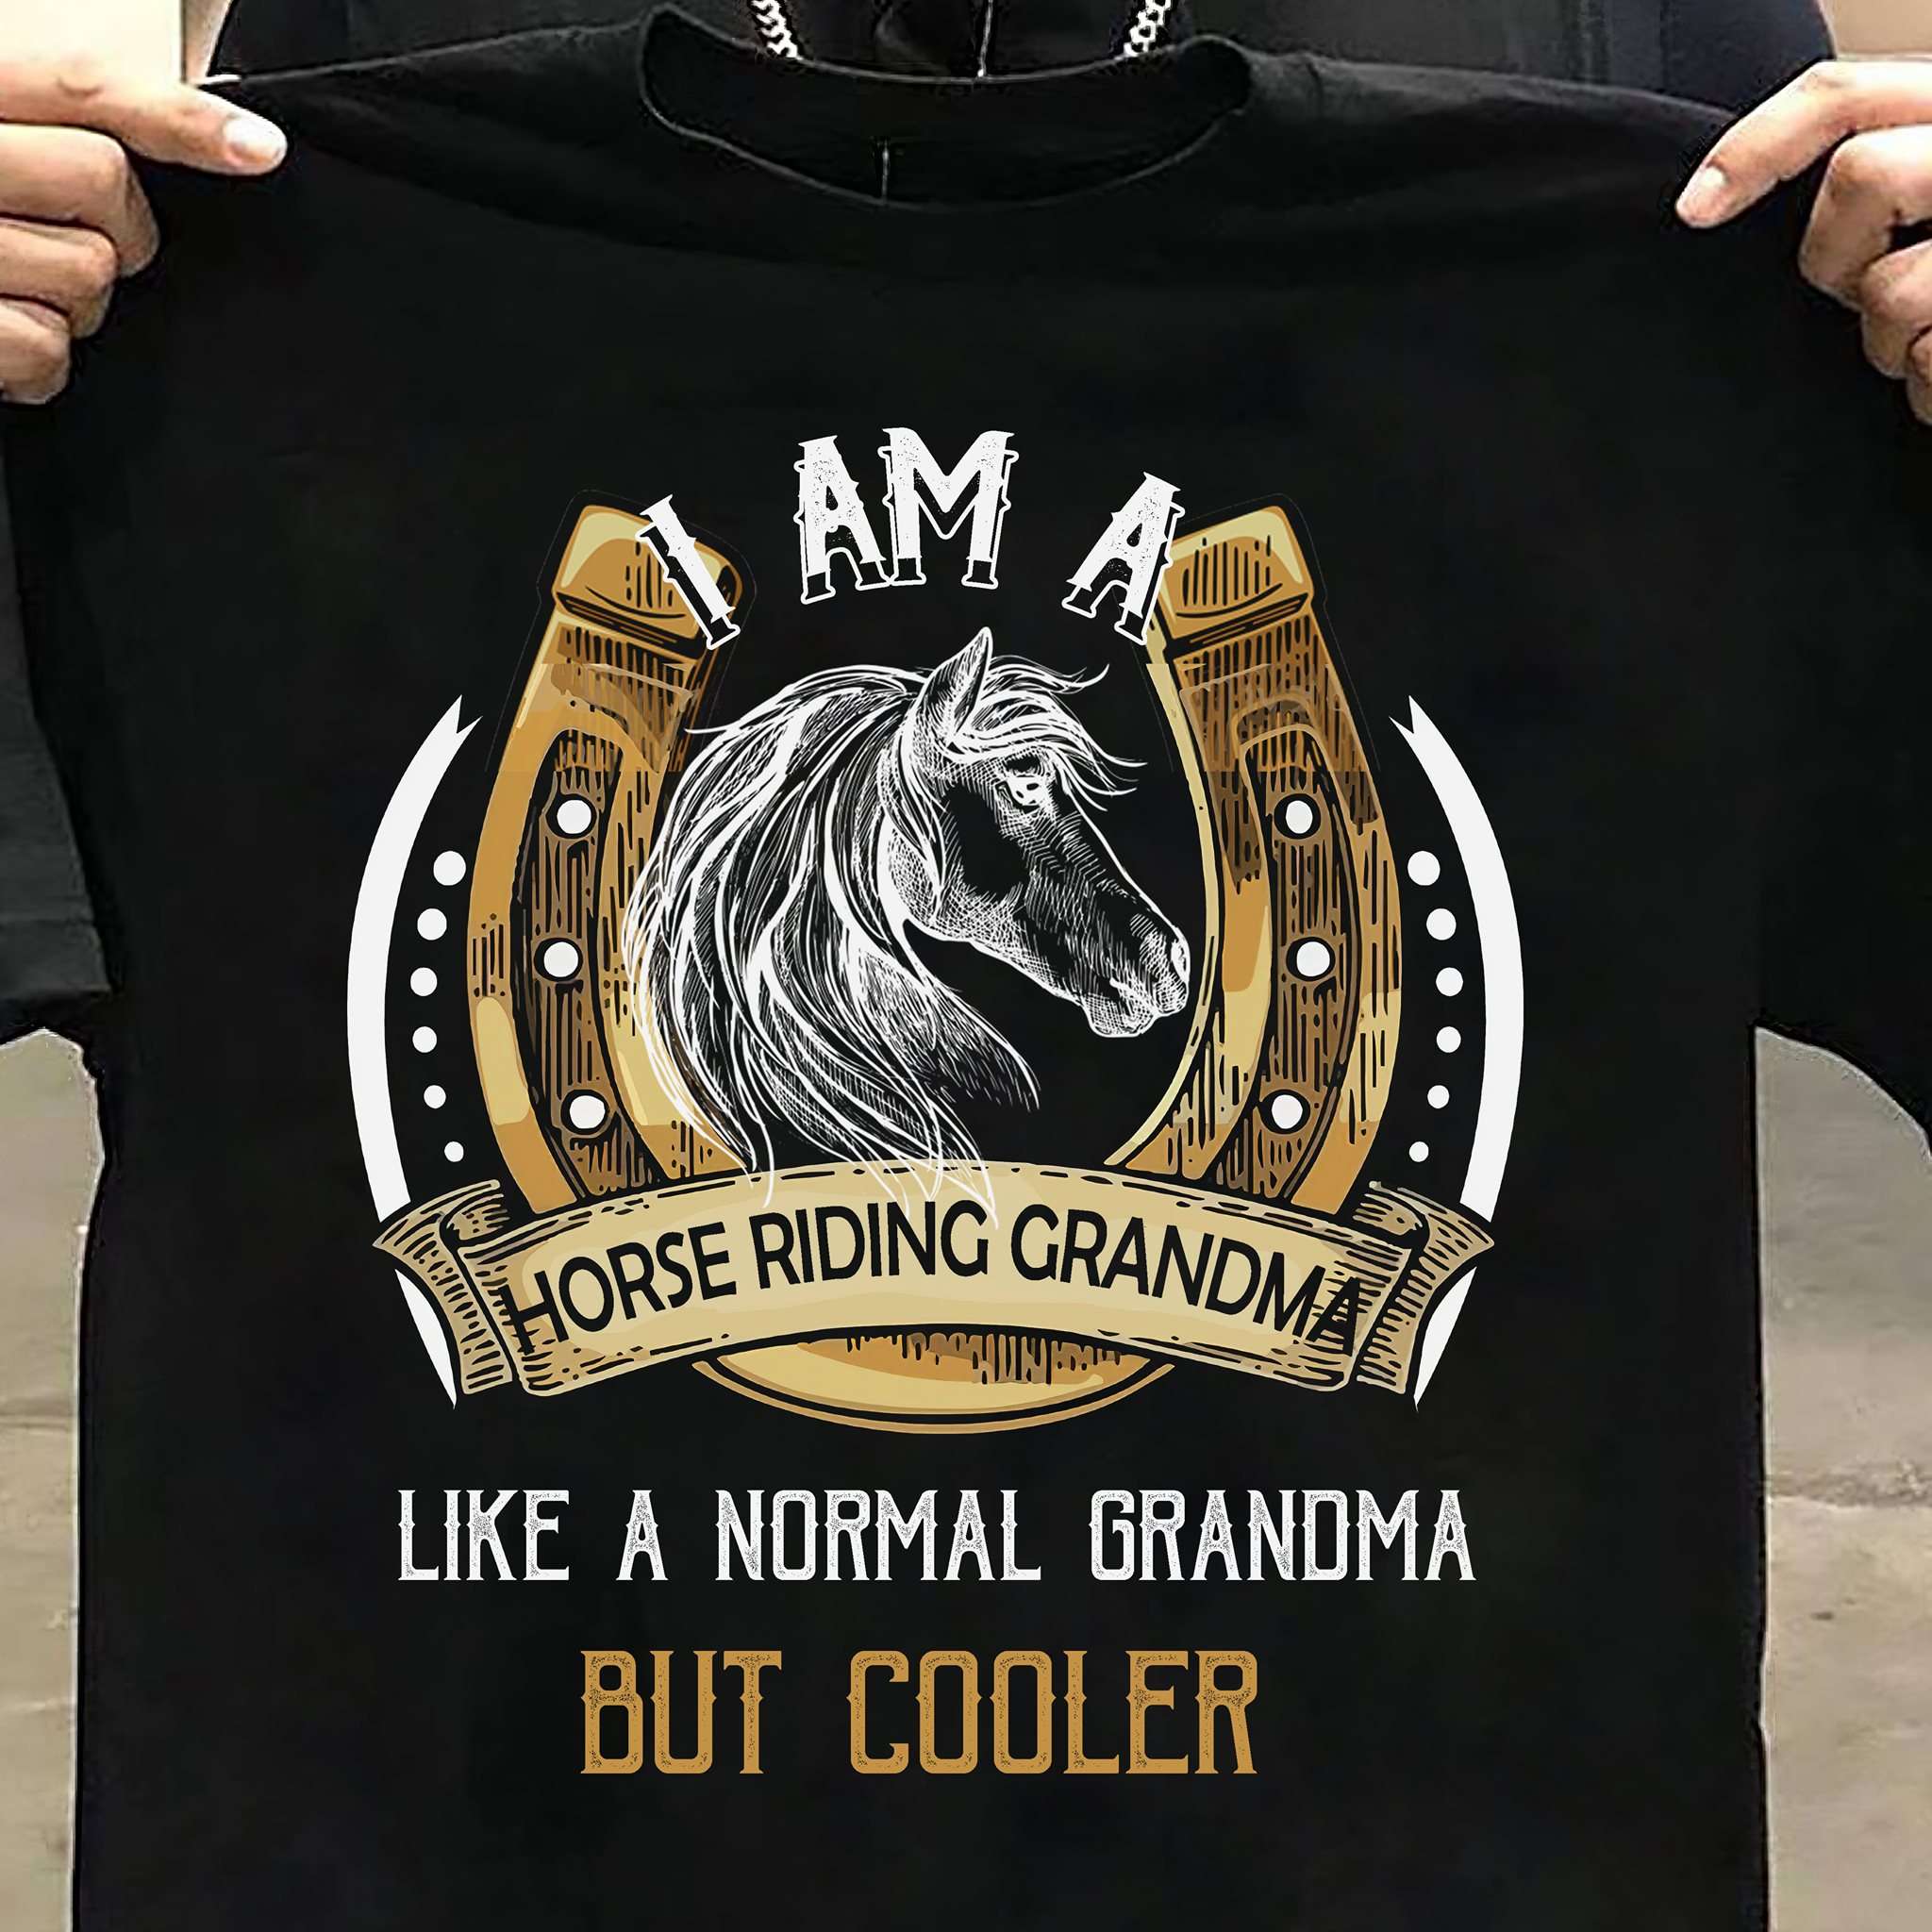 I am a Horse riding grandma like a normal grandma but cooler - Grandma loves riding horse